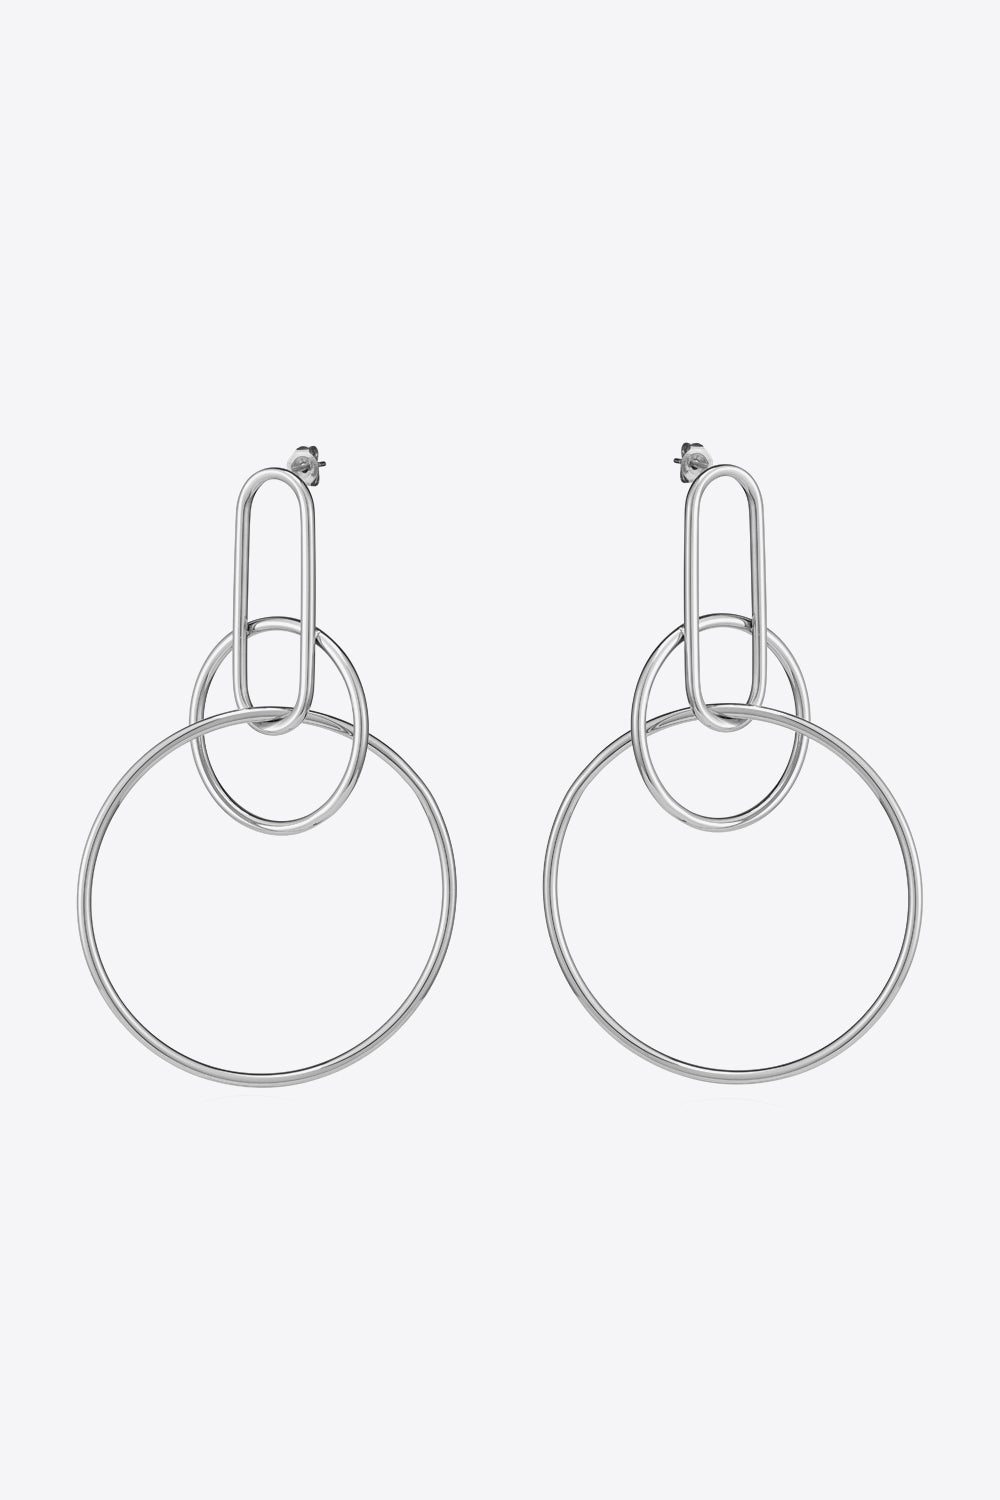 Speak For Yourself Link Hoop Earrings - London's Closet Boutique